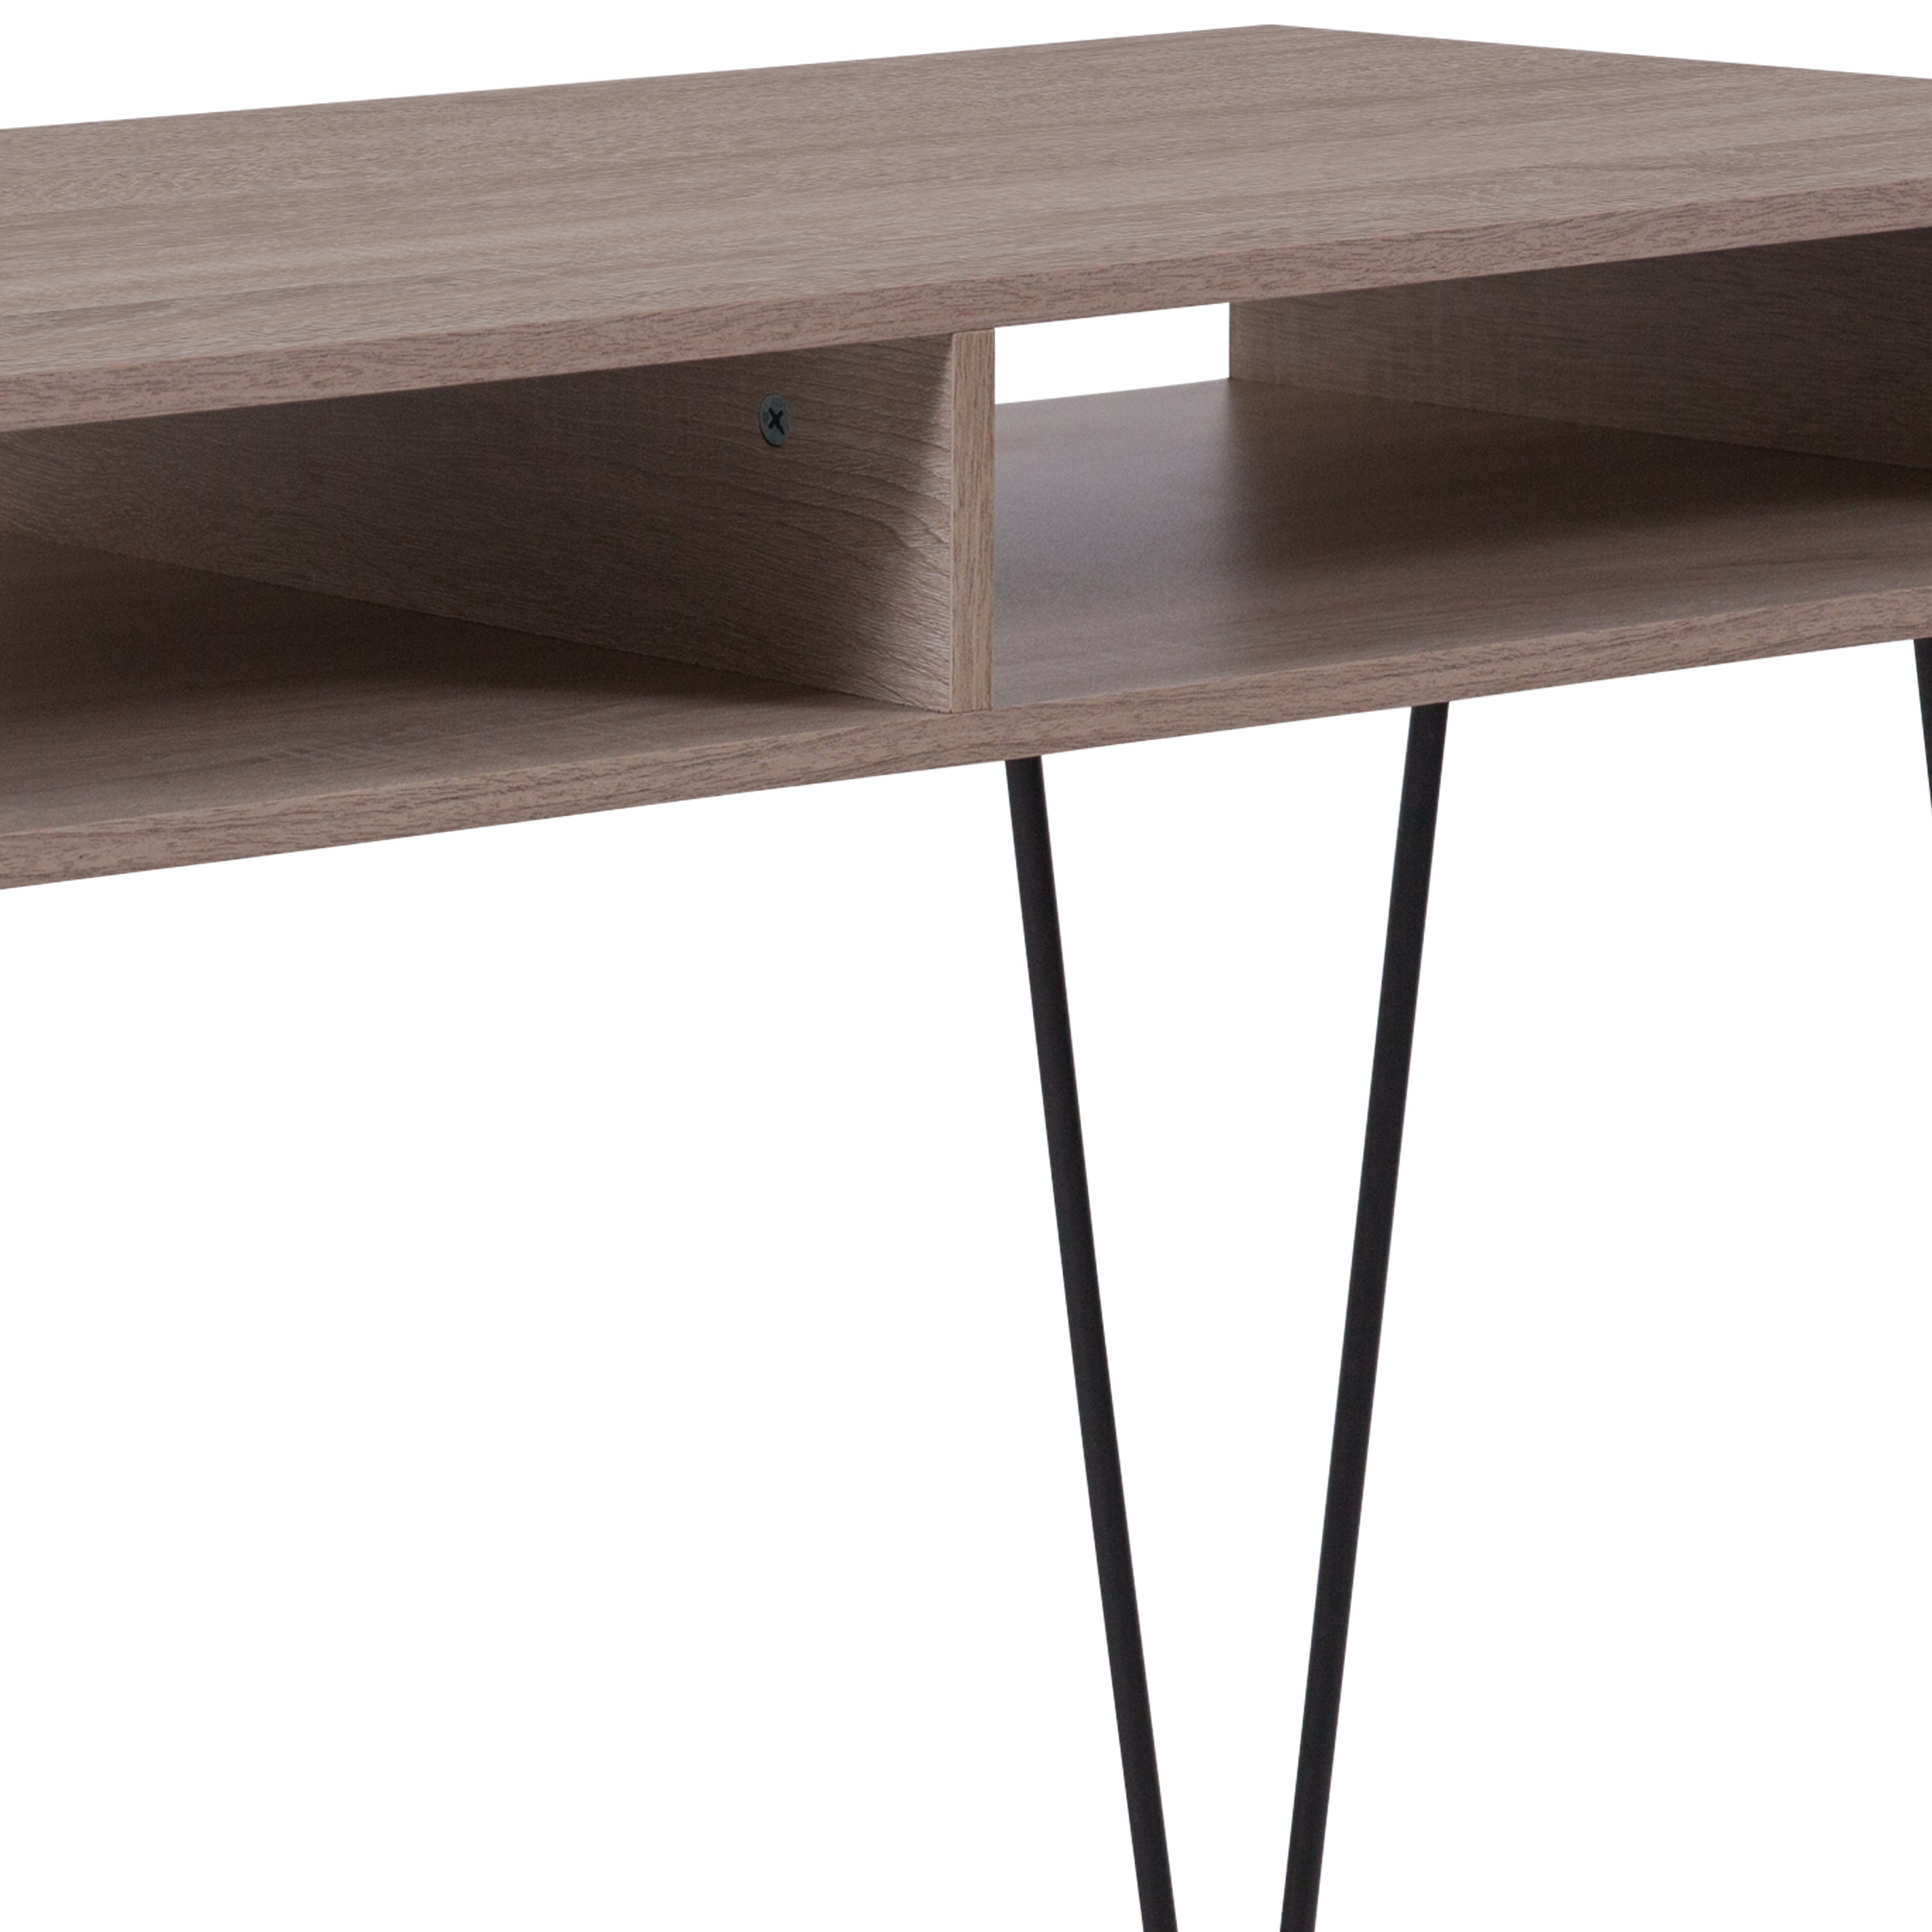 Franklin Wood Grain Finish Computer Table with Metal Legs-Desk-Flash Furniture-Wall2Wall Furnishings